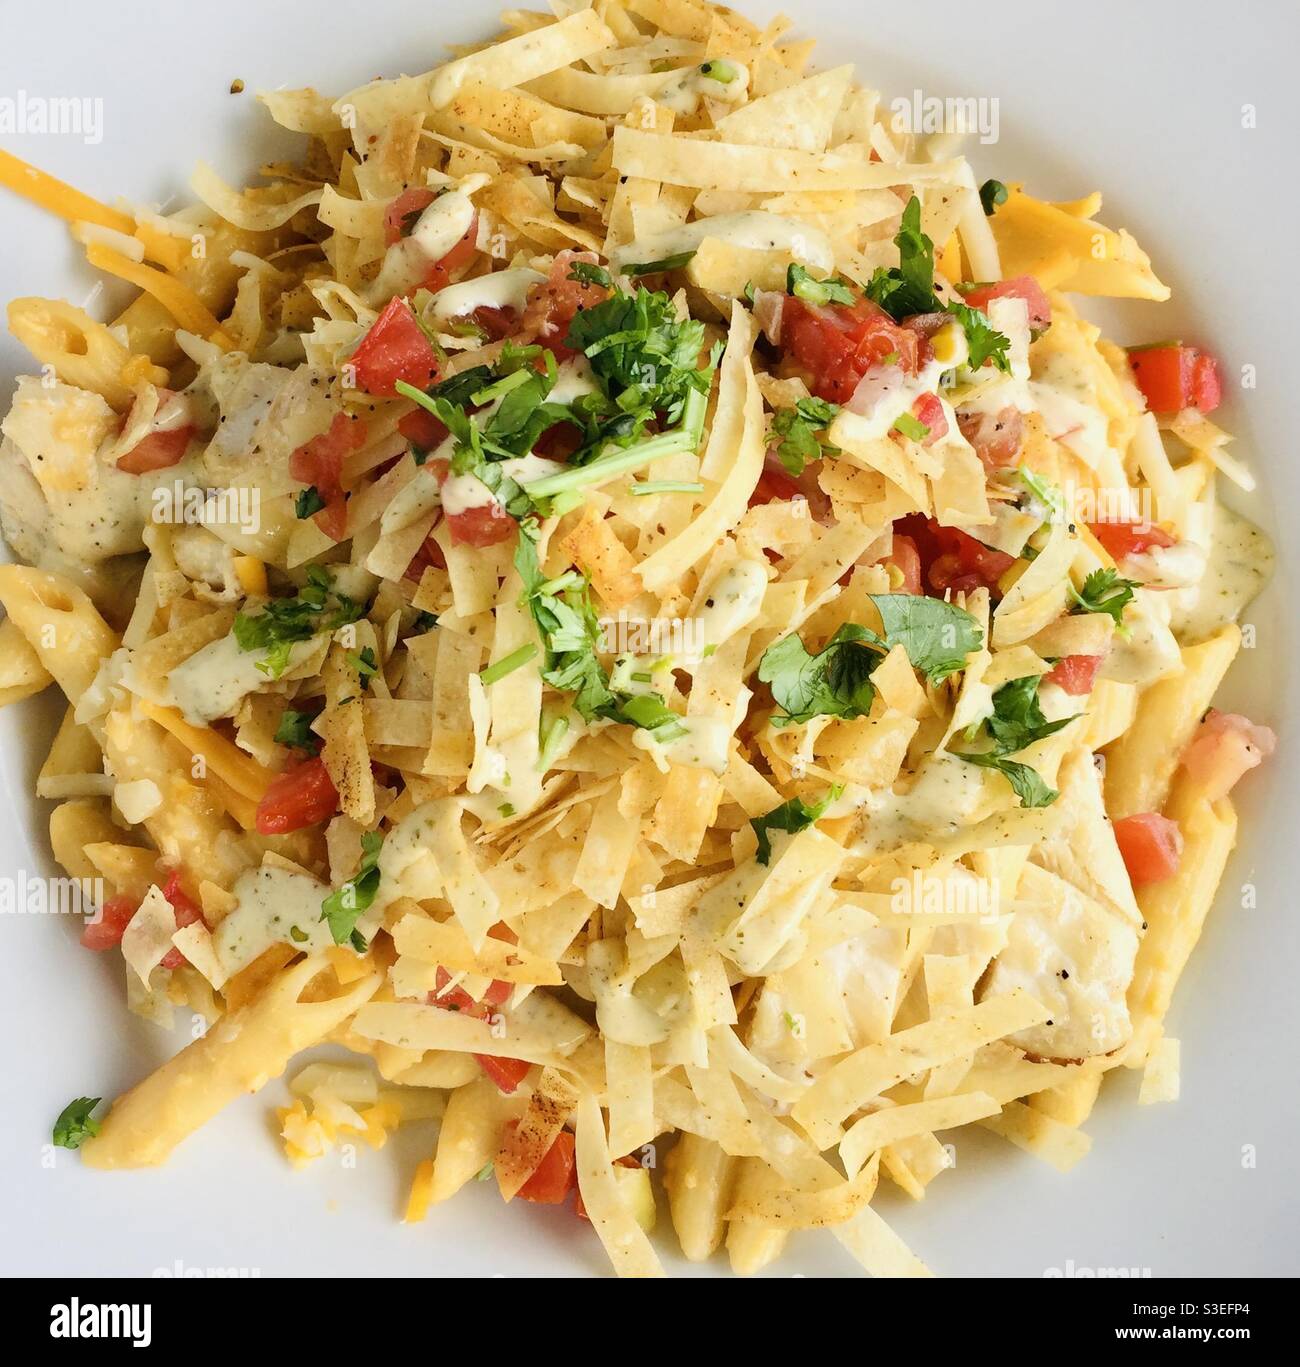 Delicious vegetarian pasta dish. Stock Photo